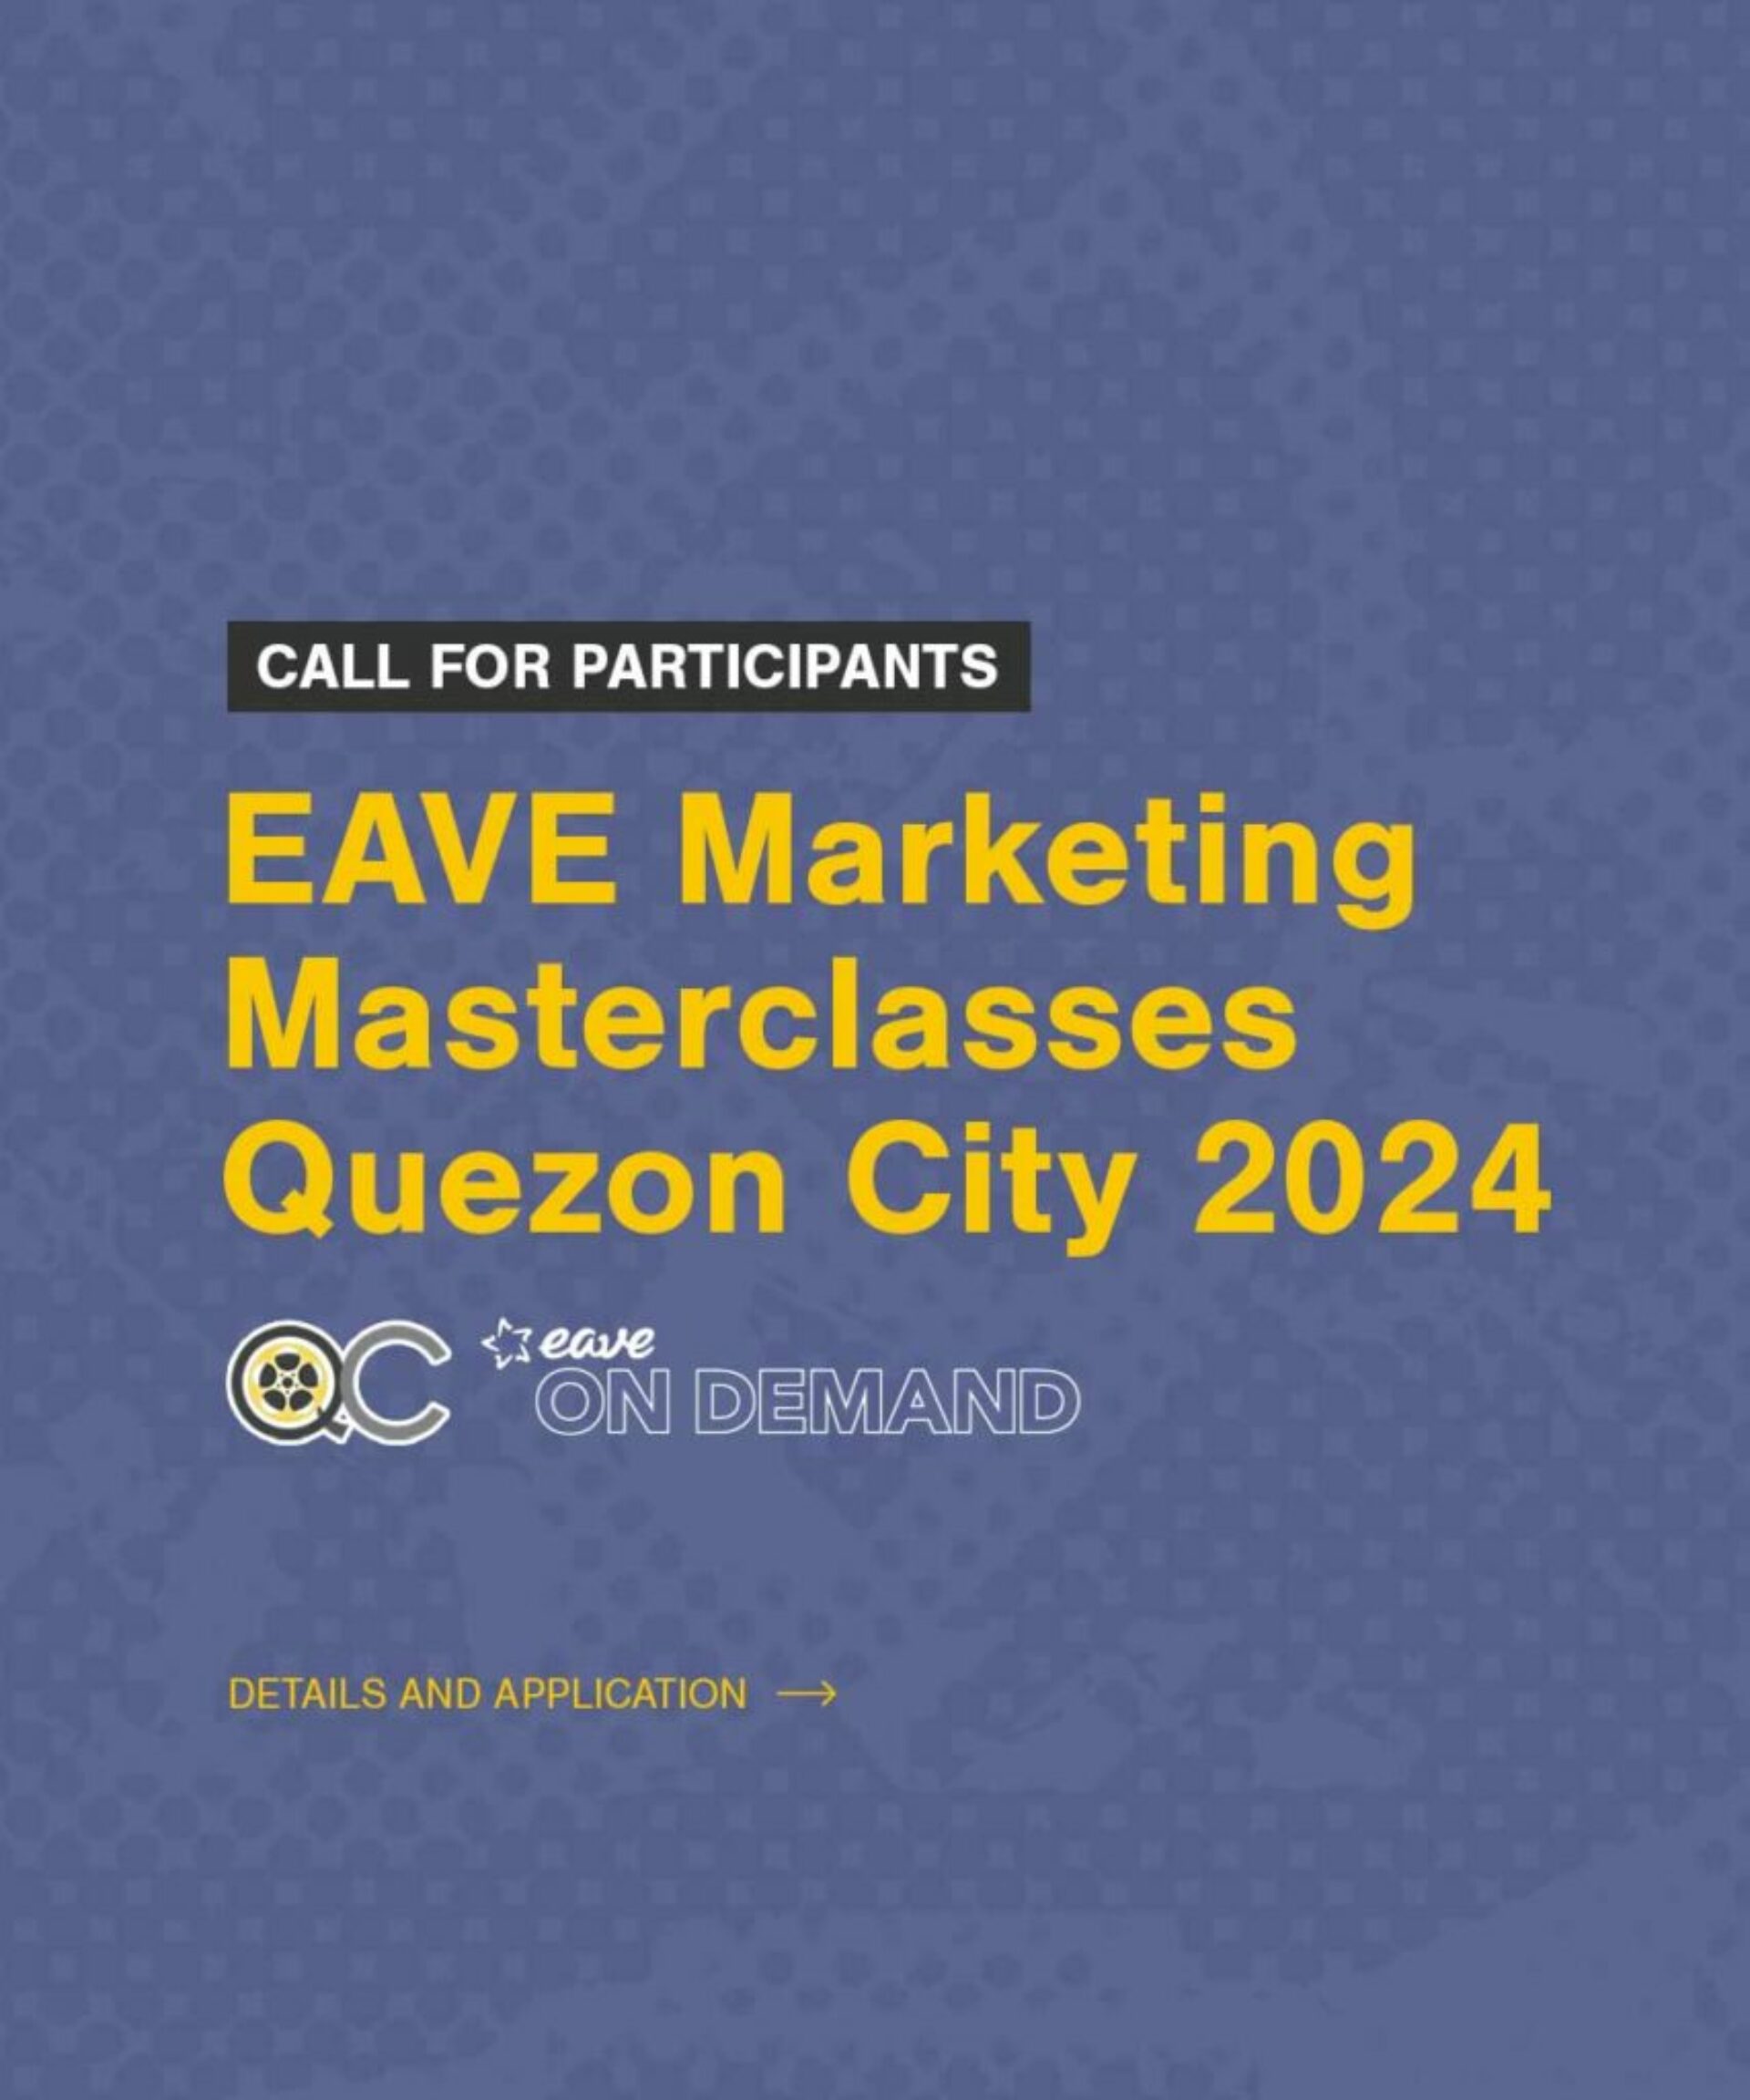 Call for Participants: EAVE Marketing Masterclasses | Quezon City 2024